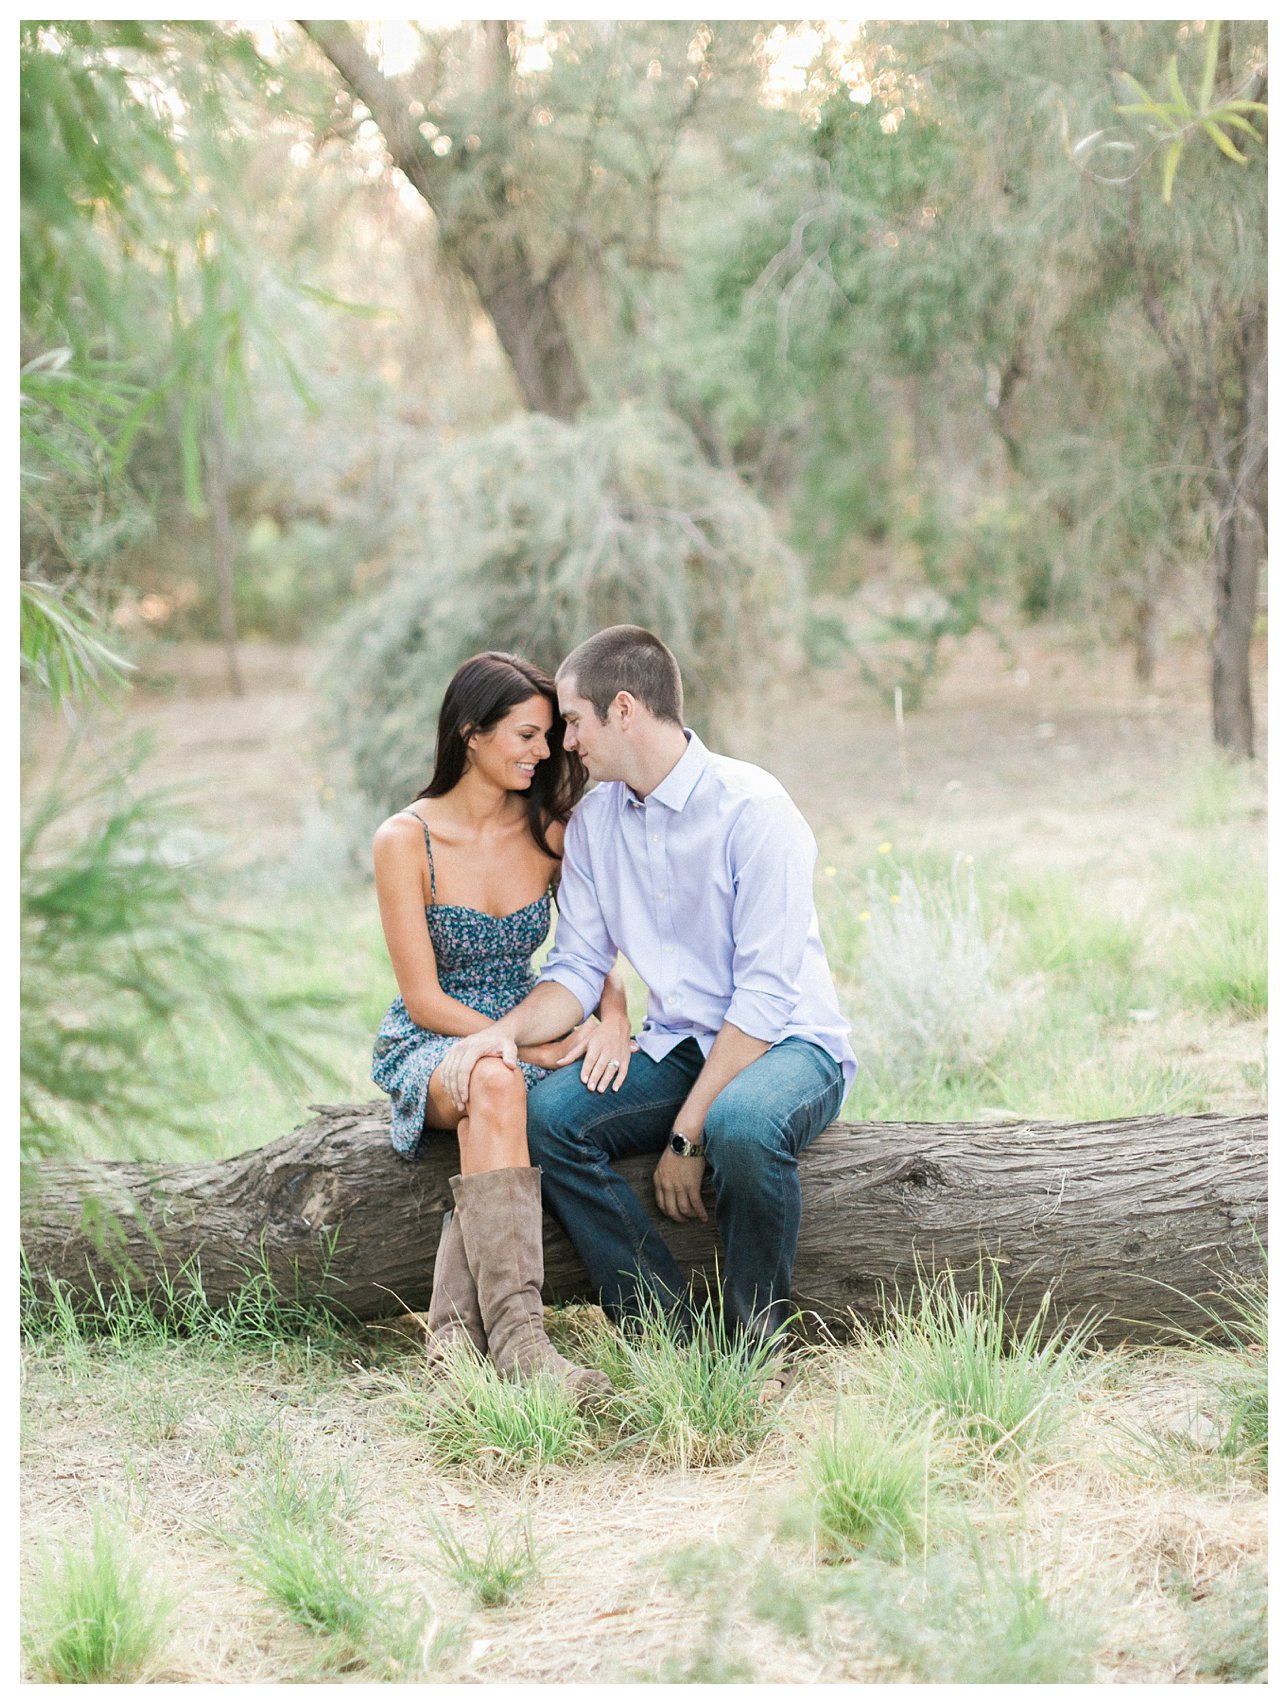 Boyce Thompson Arboretum engagement photos - Scottsdale Wedding Photographer | Rachel Solomon Photography_4718